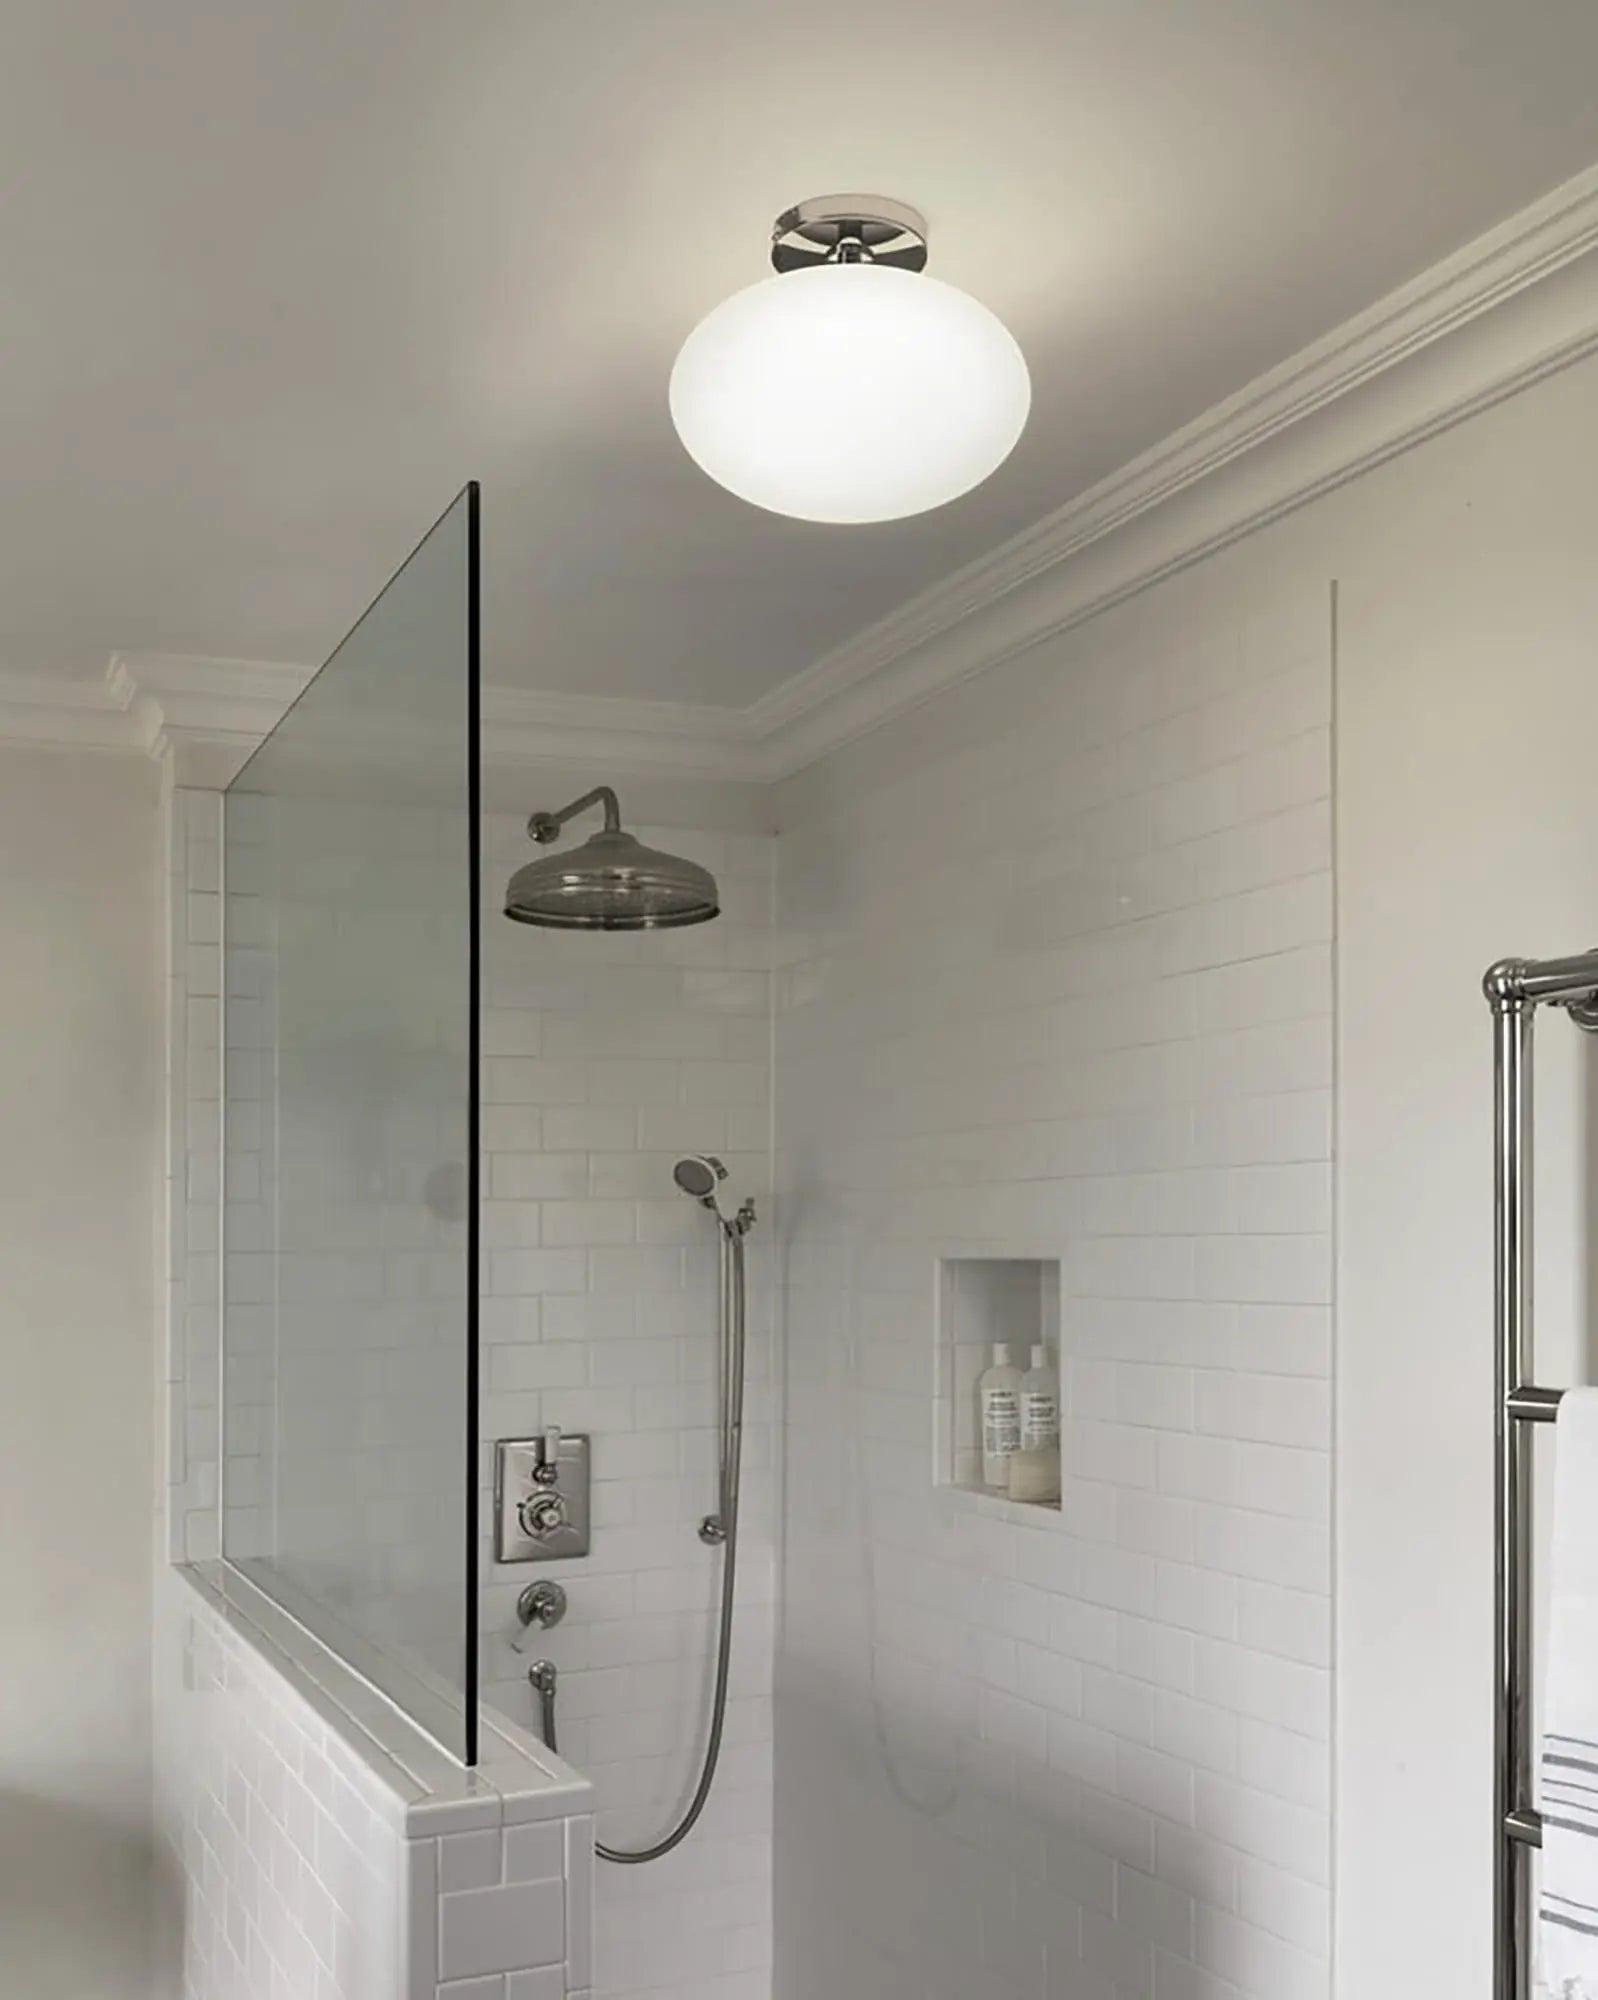 Zeppo orb glass ceiling light in a bathroom near a shower